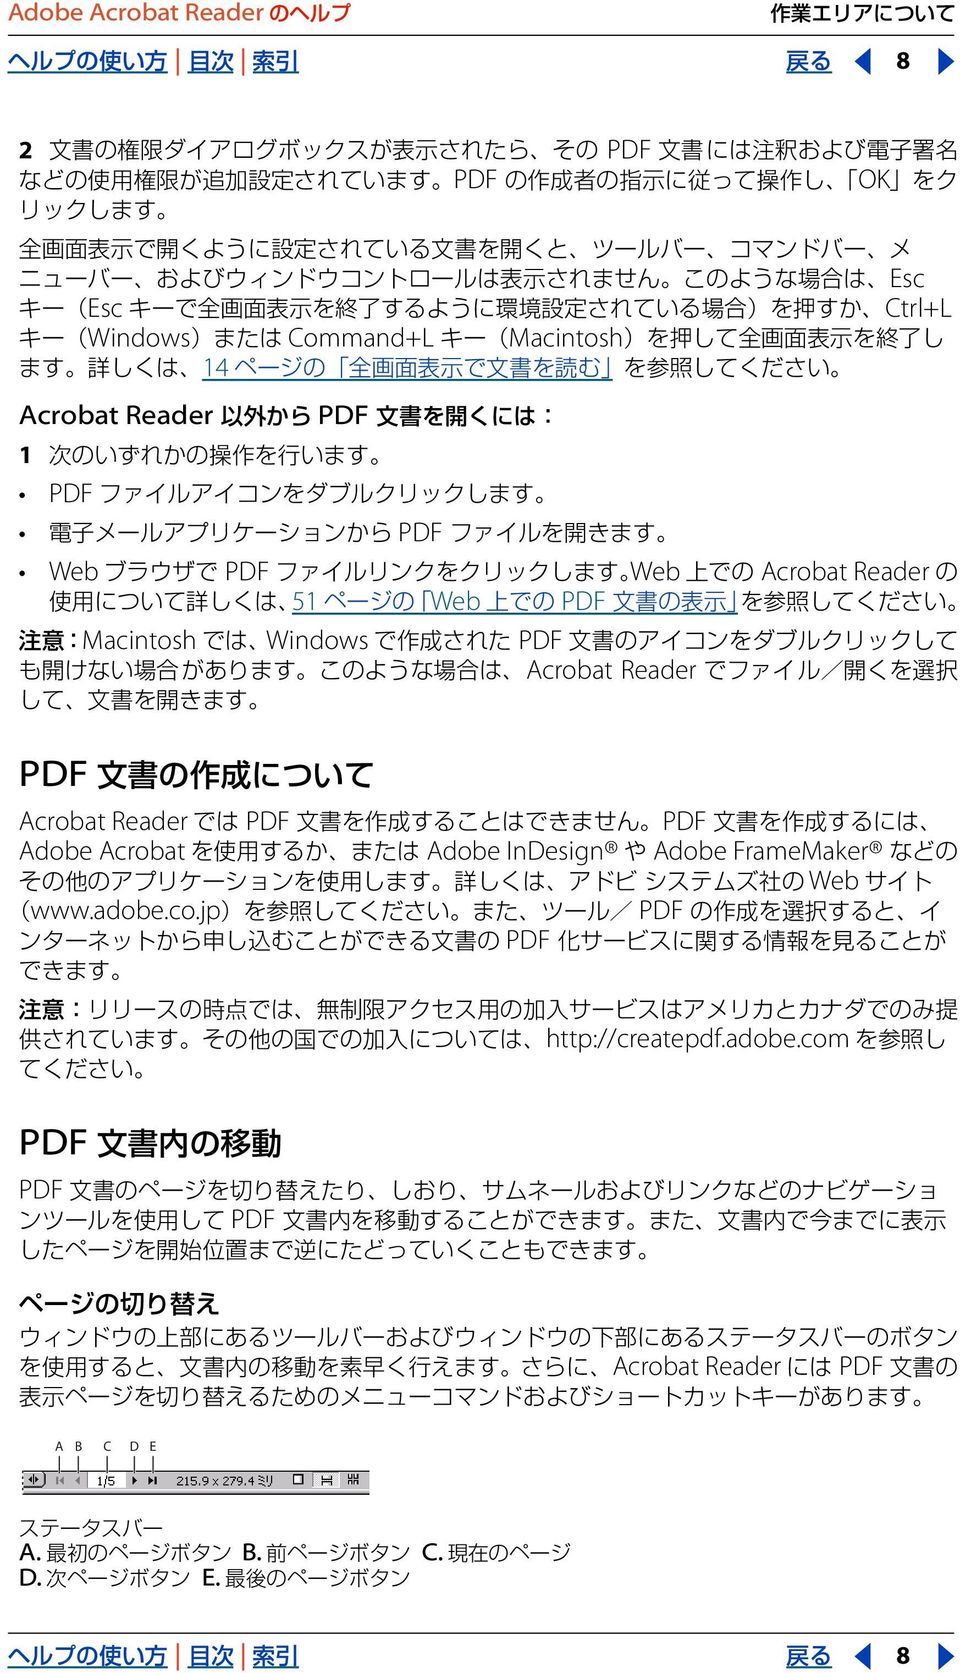 Acrobat Reader PDF PDF Adobe Acrobat Adobe InDesign Adobe FrameMaker Web www.adobe.co.